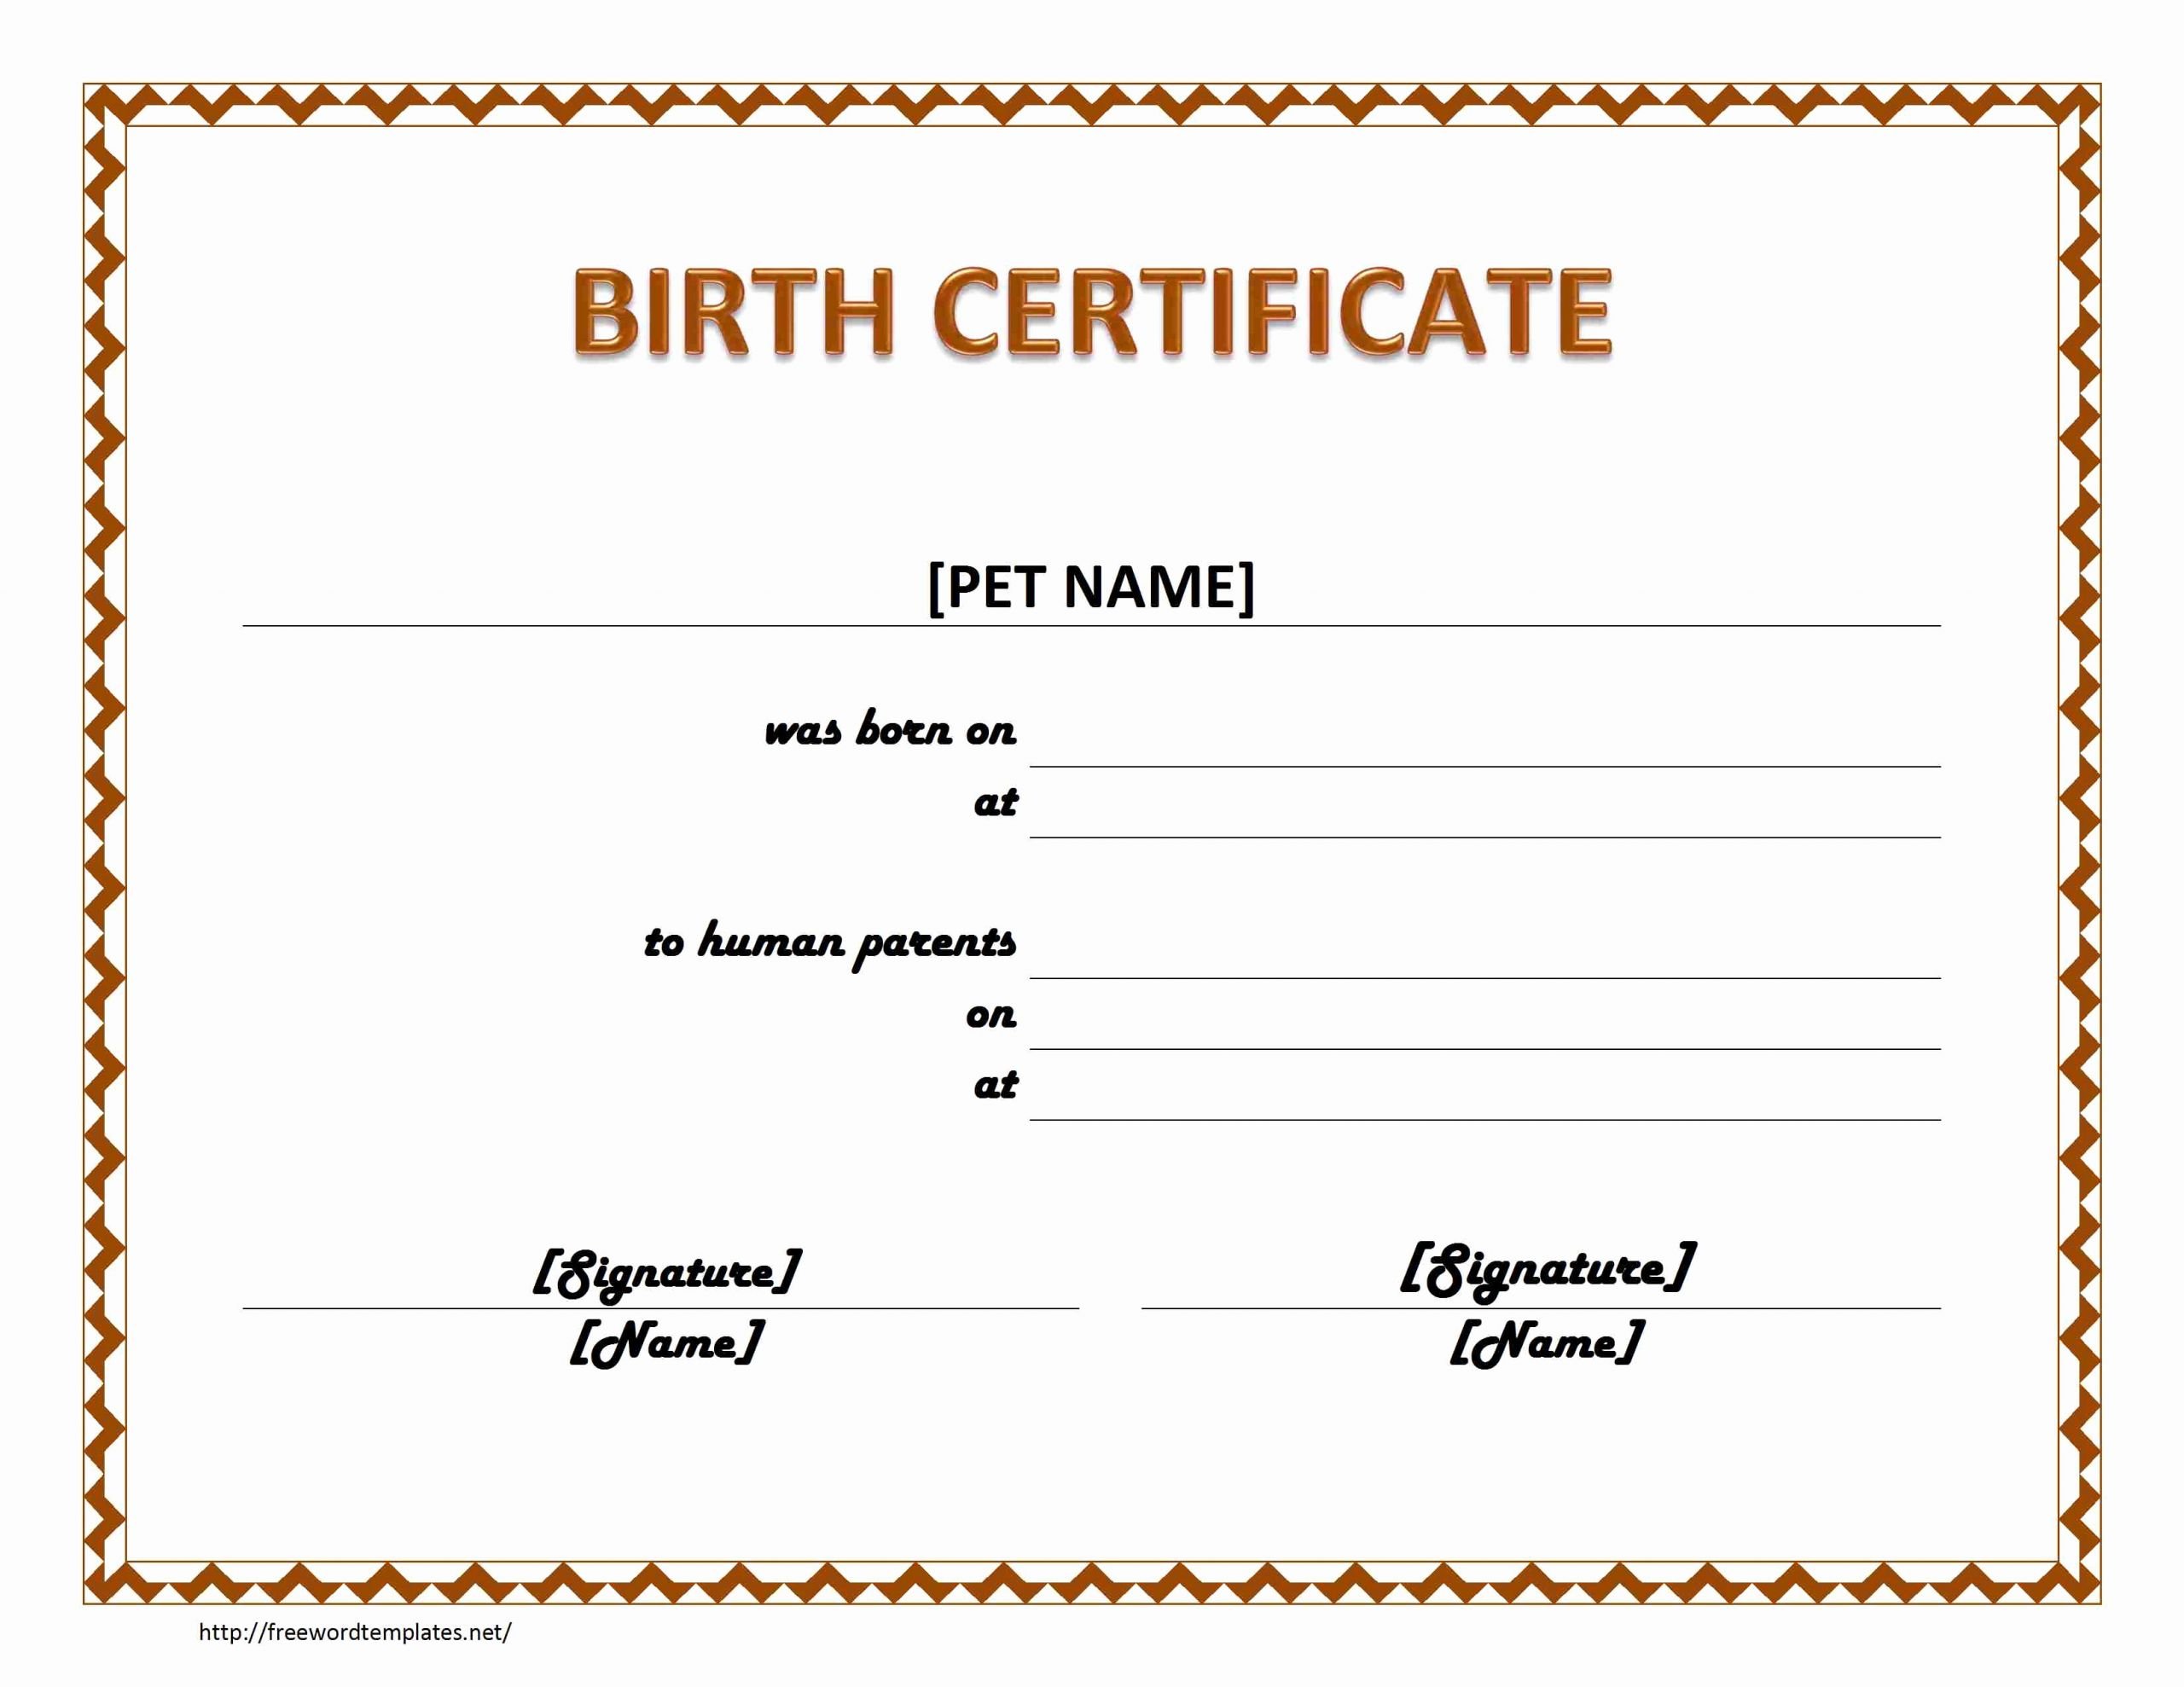 Birth Certificate Template Free Unique Pet Birth Certificate